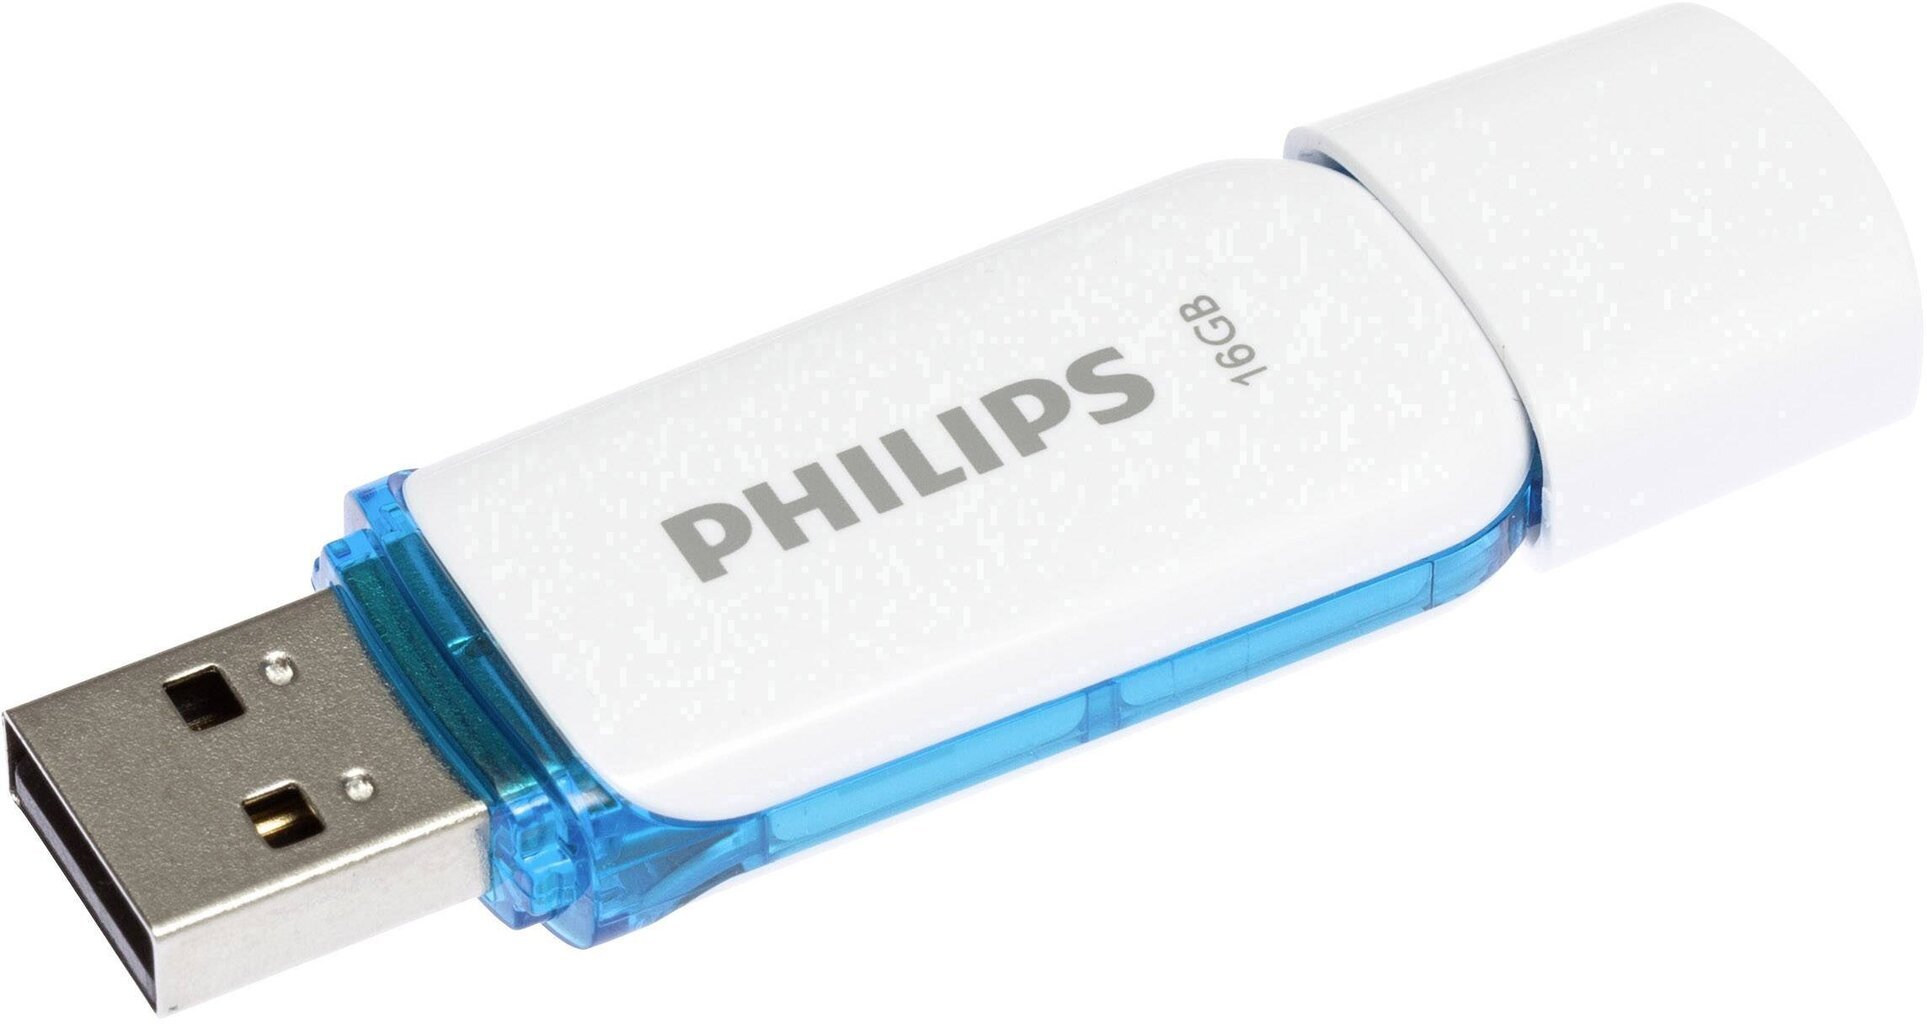 Philips Snow Edition USB 2.0 16GB kaina ir informacija | USB laikmenos | pigu.lt